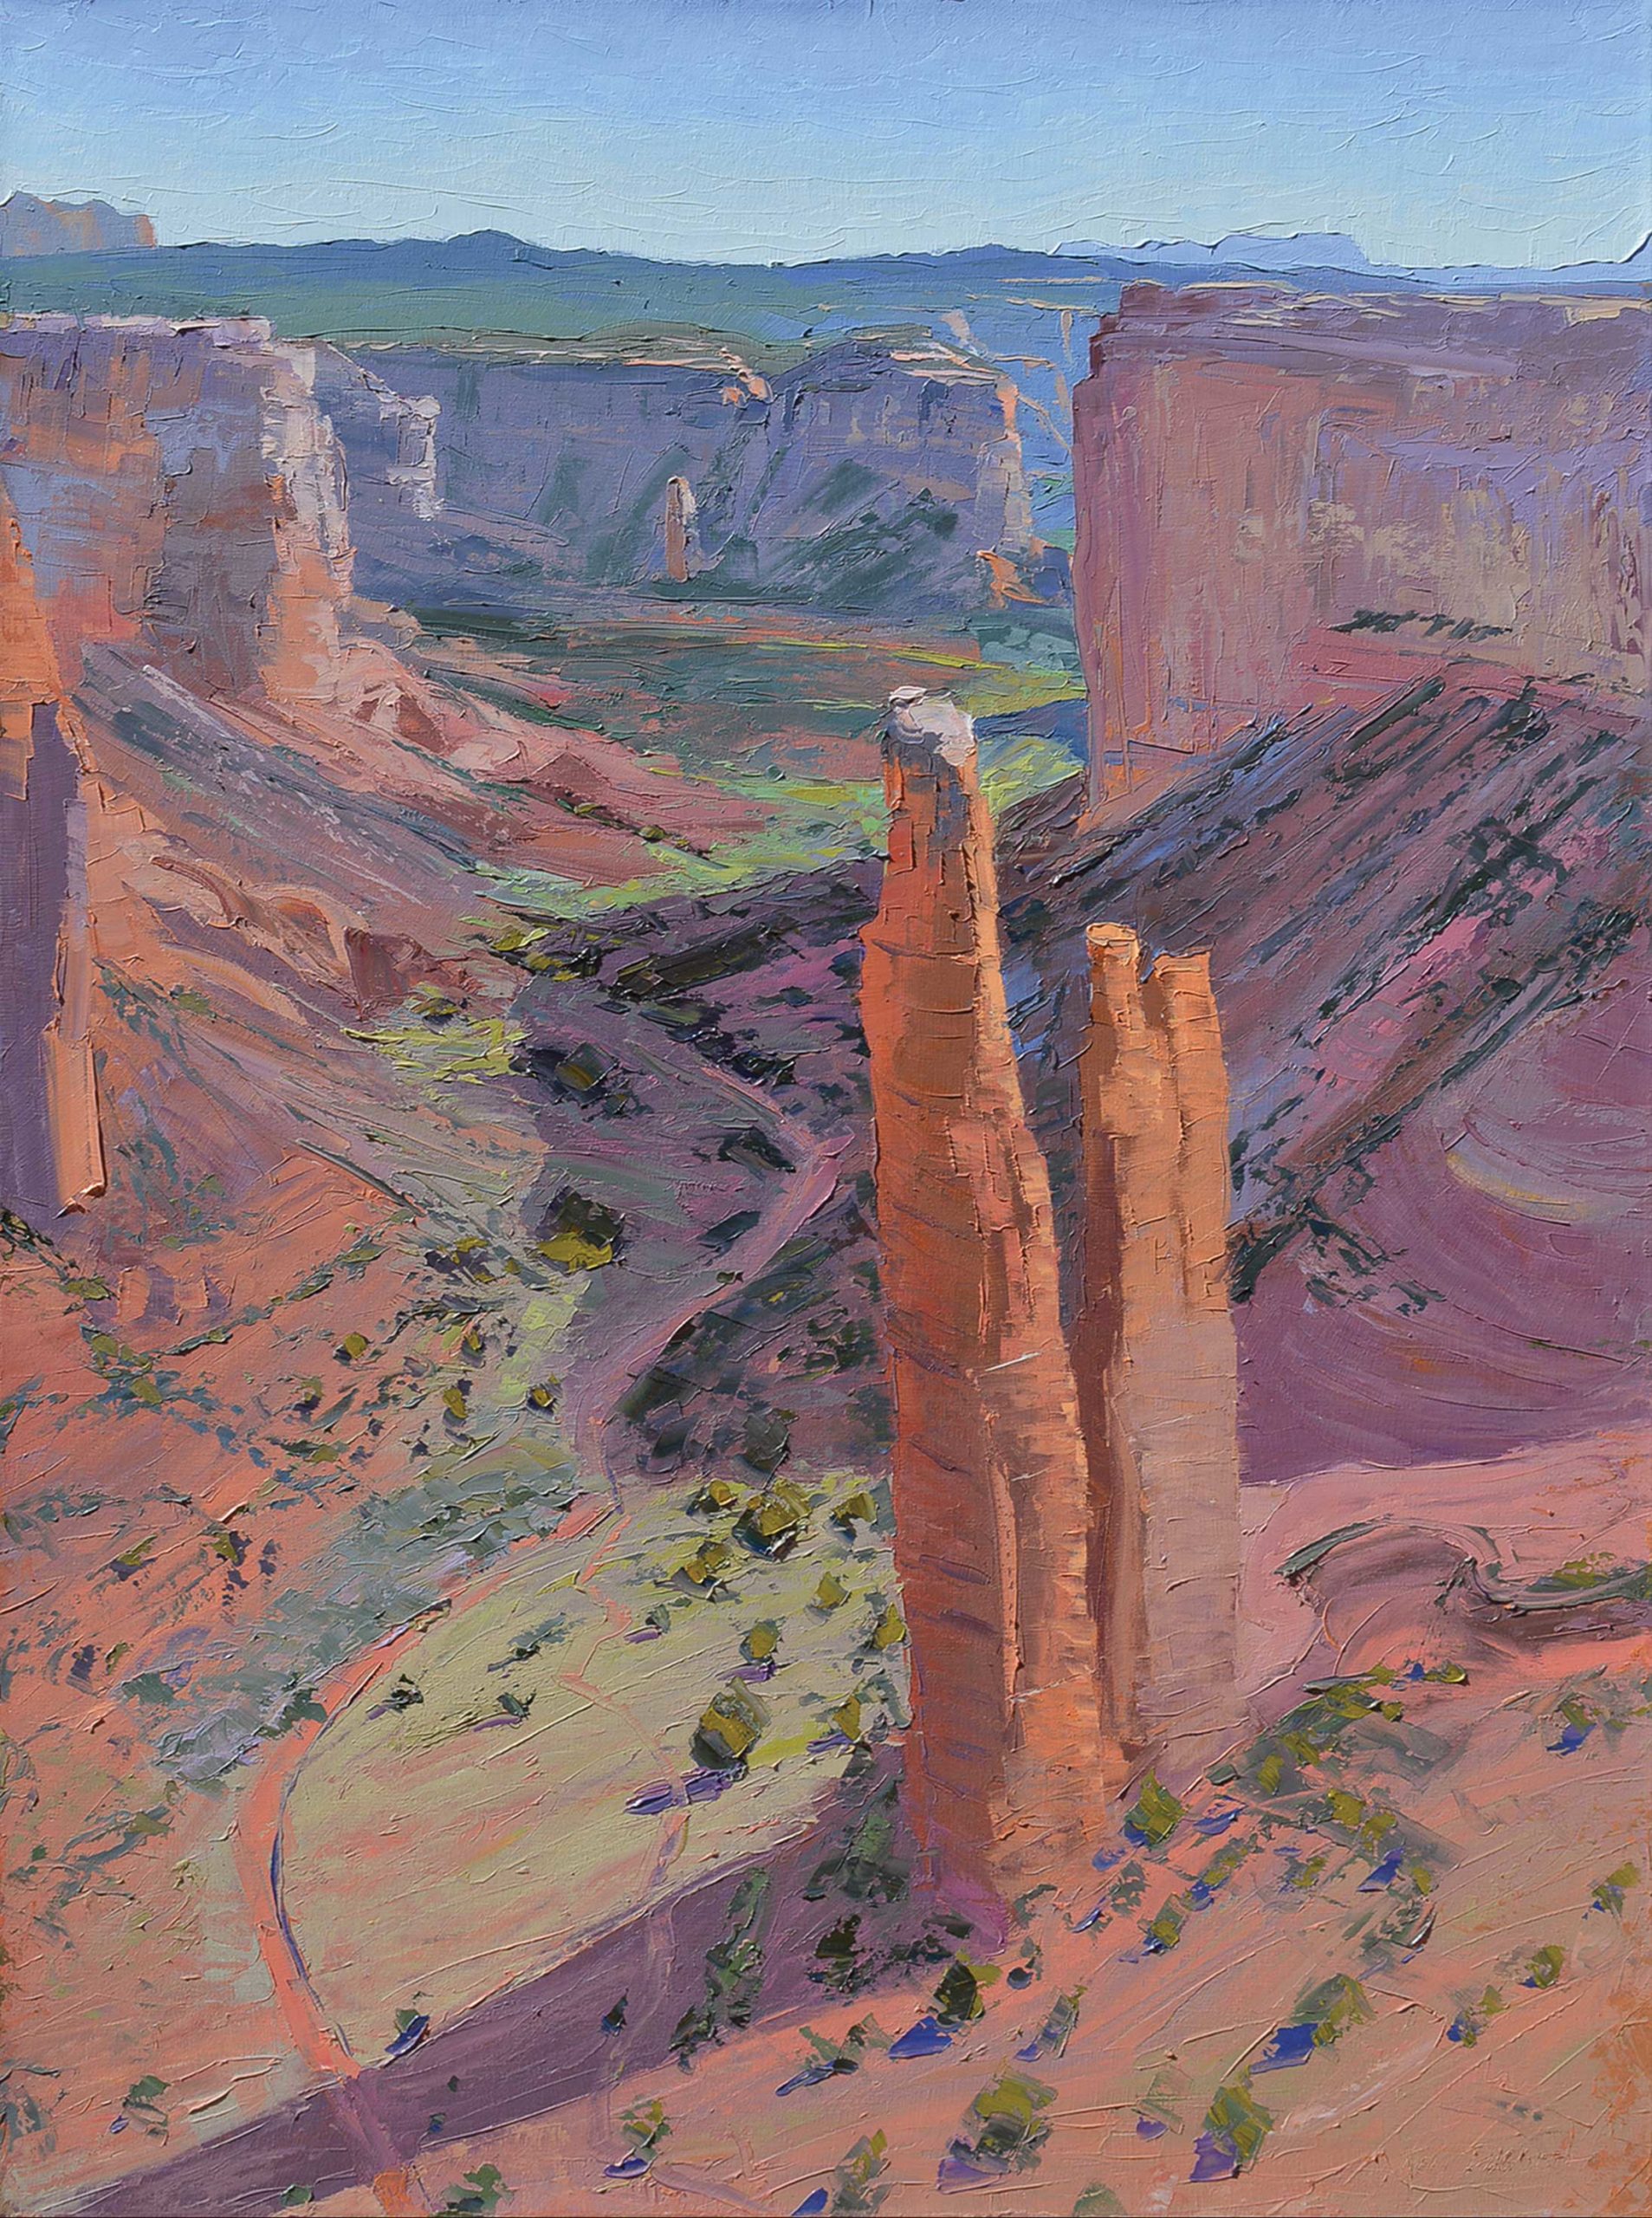 Ken Daggett (b. 1953), "Spider Rock," [Canyon de Chelly National Monument, Arizona], oil on canvas, 40 x 30 in., Meyer Gallery, Santa Fe